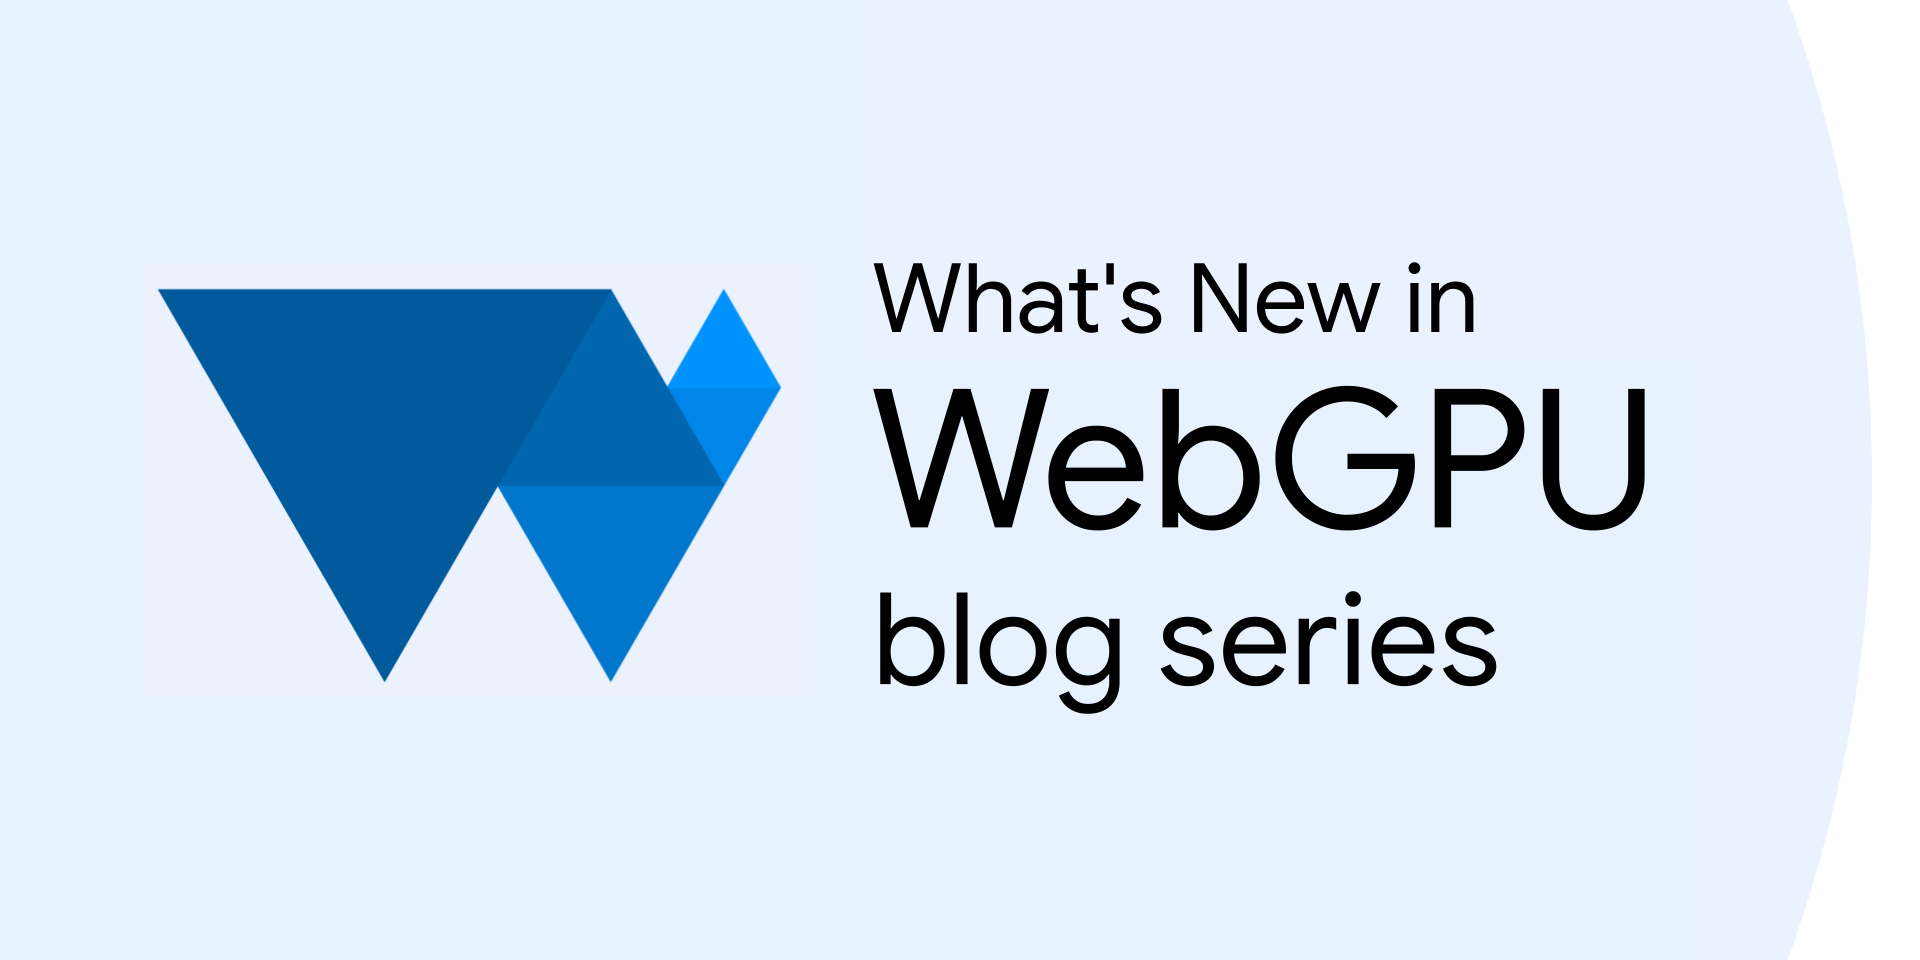 What's New in WebGPU.